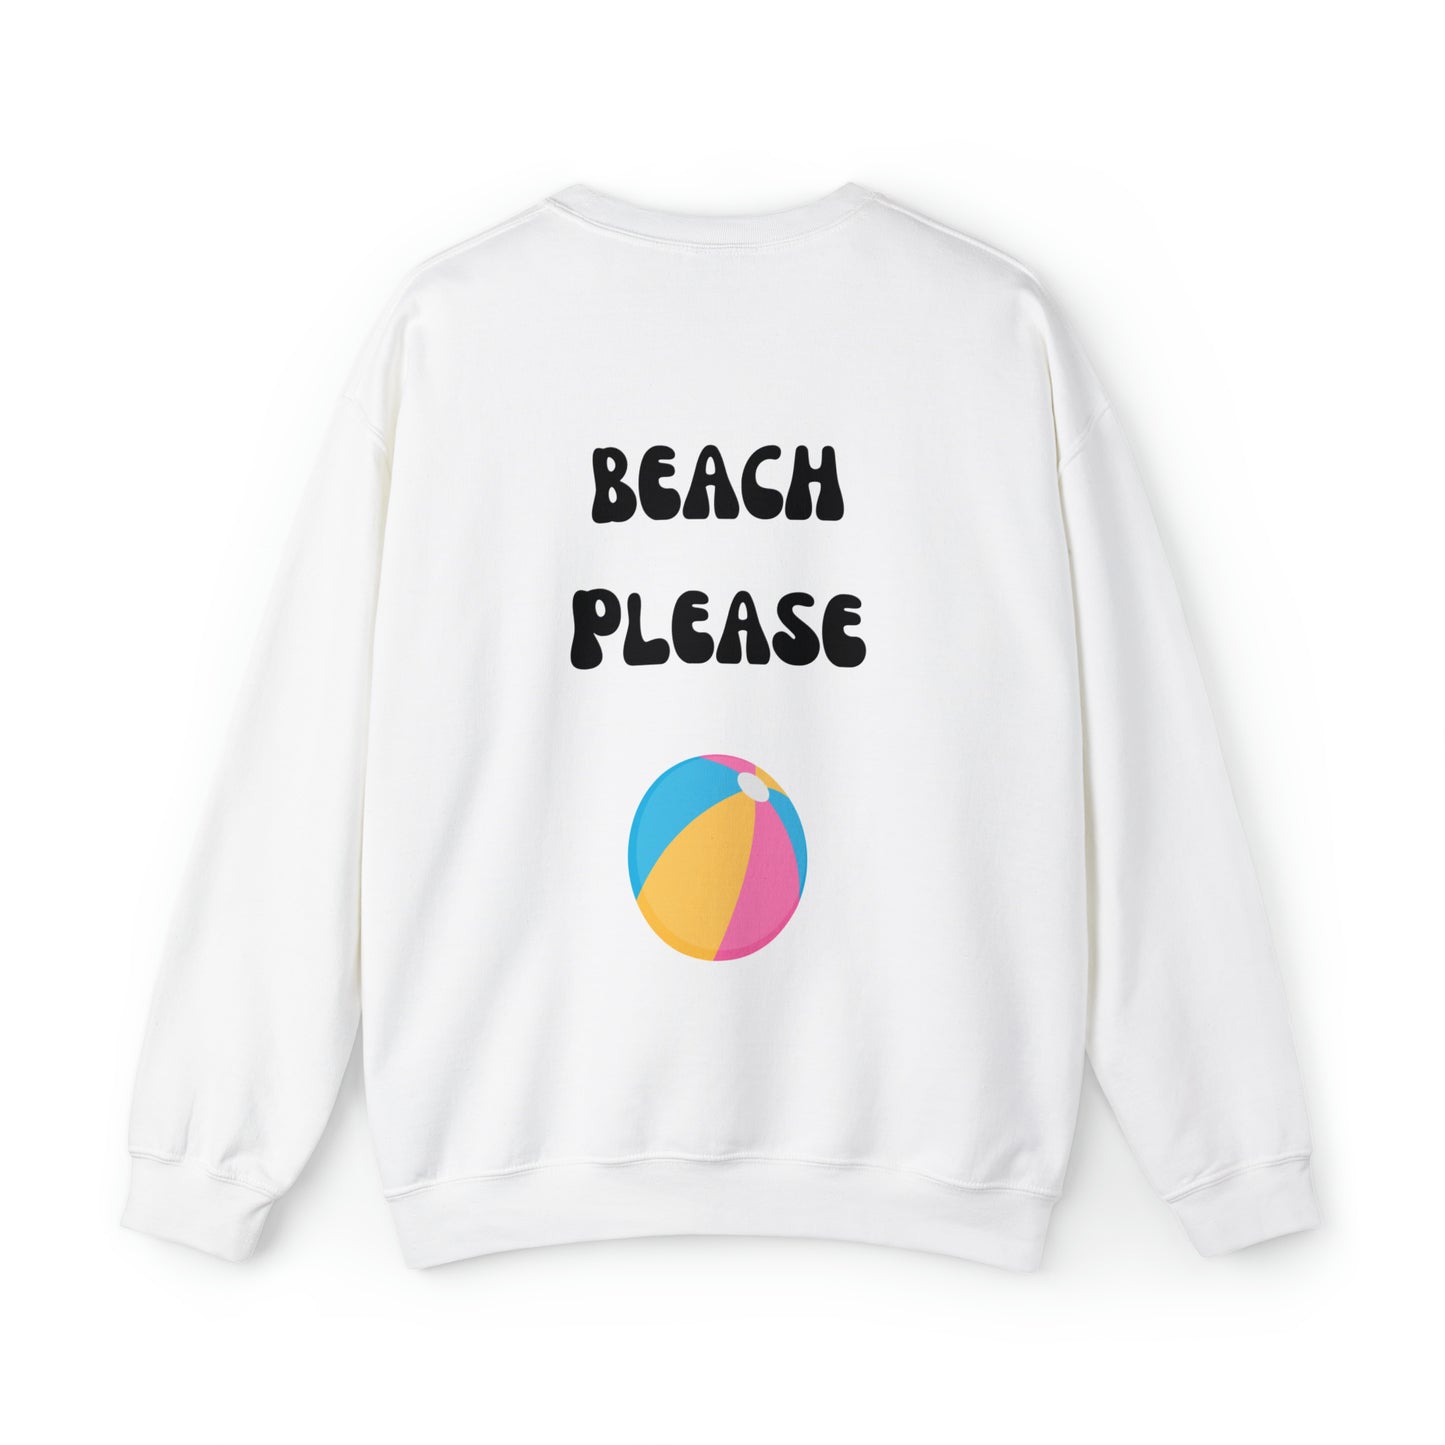 Beach Please sweatshirt